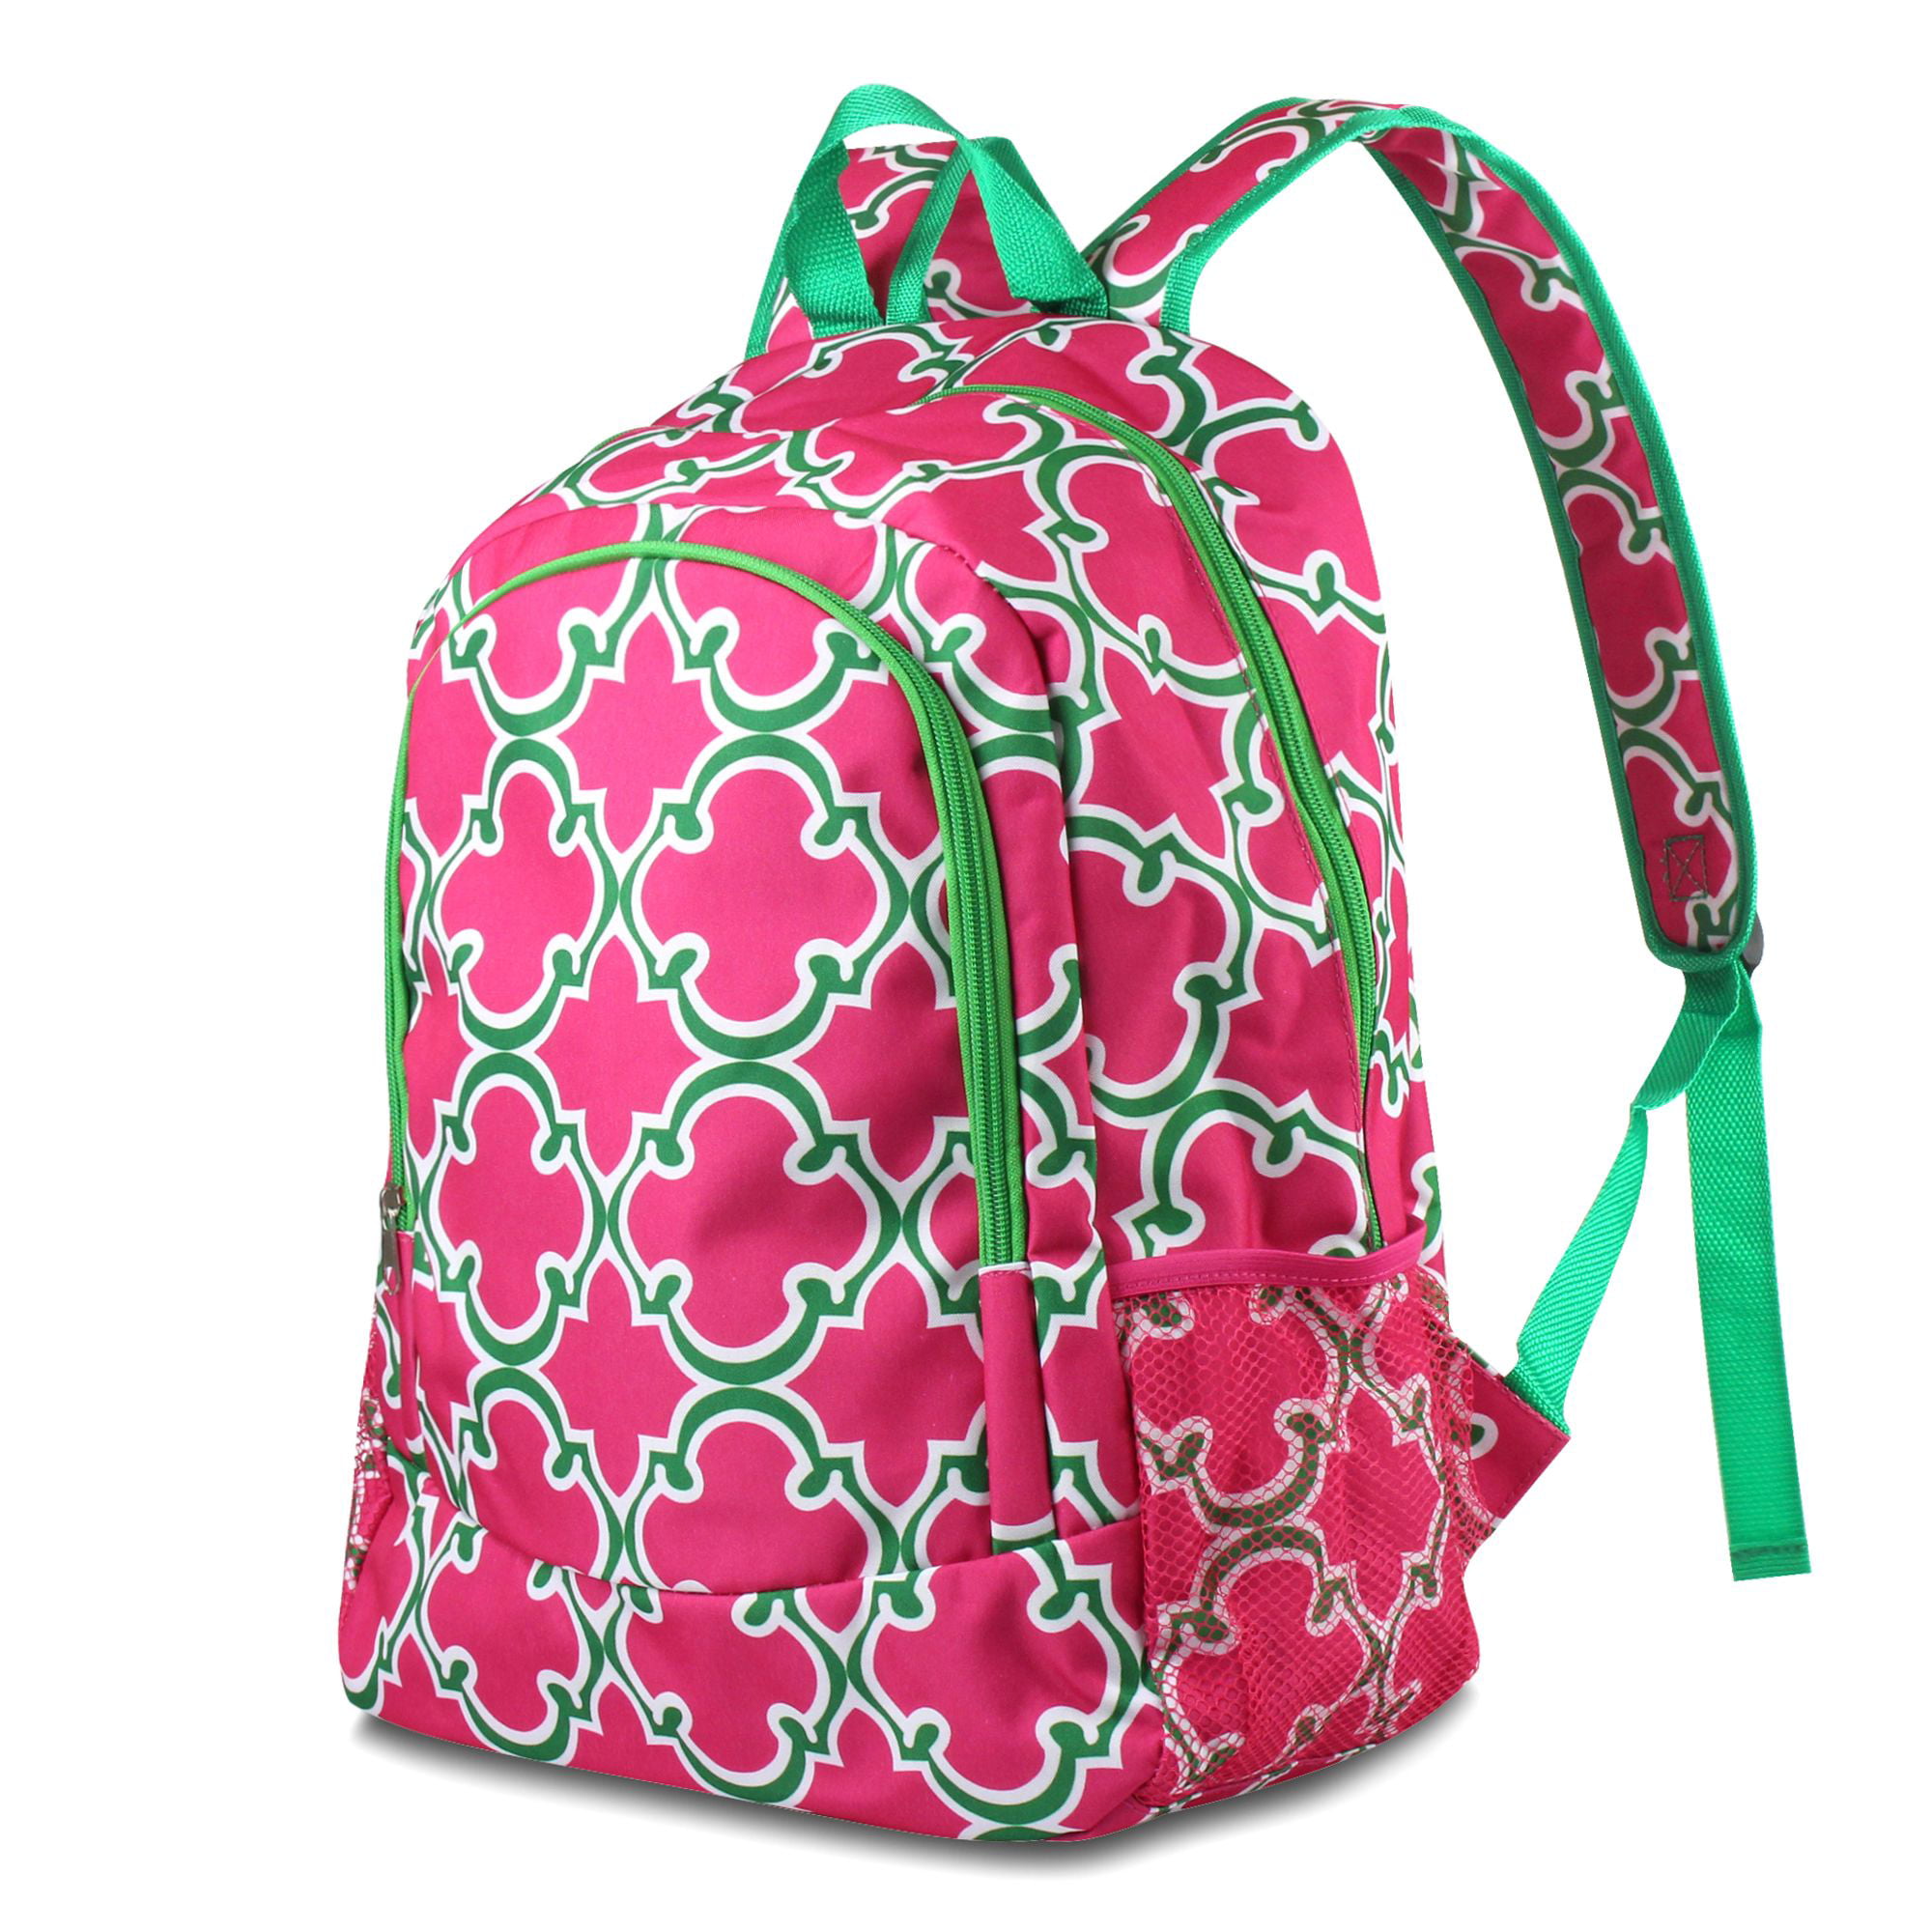 Tropical birds seamless Kids School Backpack Bookbag Schoolbag Casual Travel Laptop bag For Adult Teen Boys Girls 